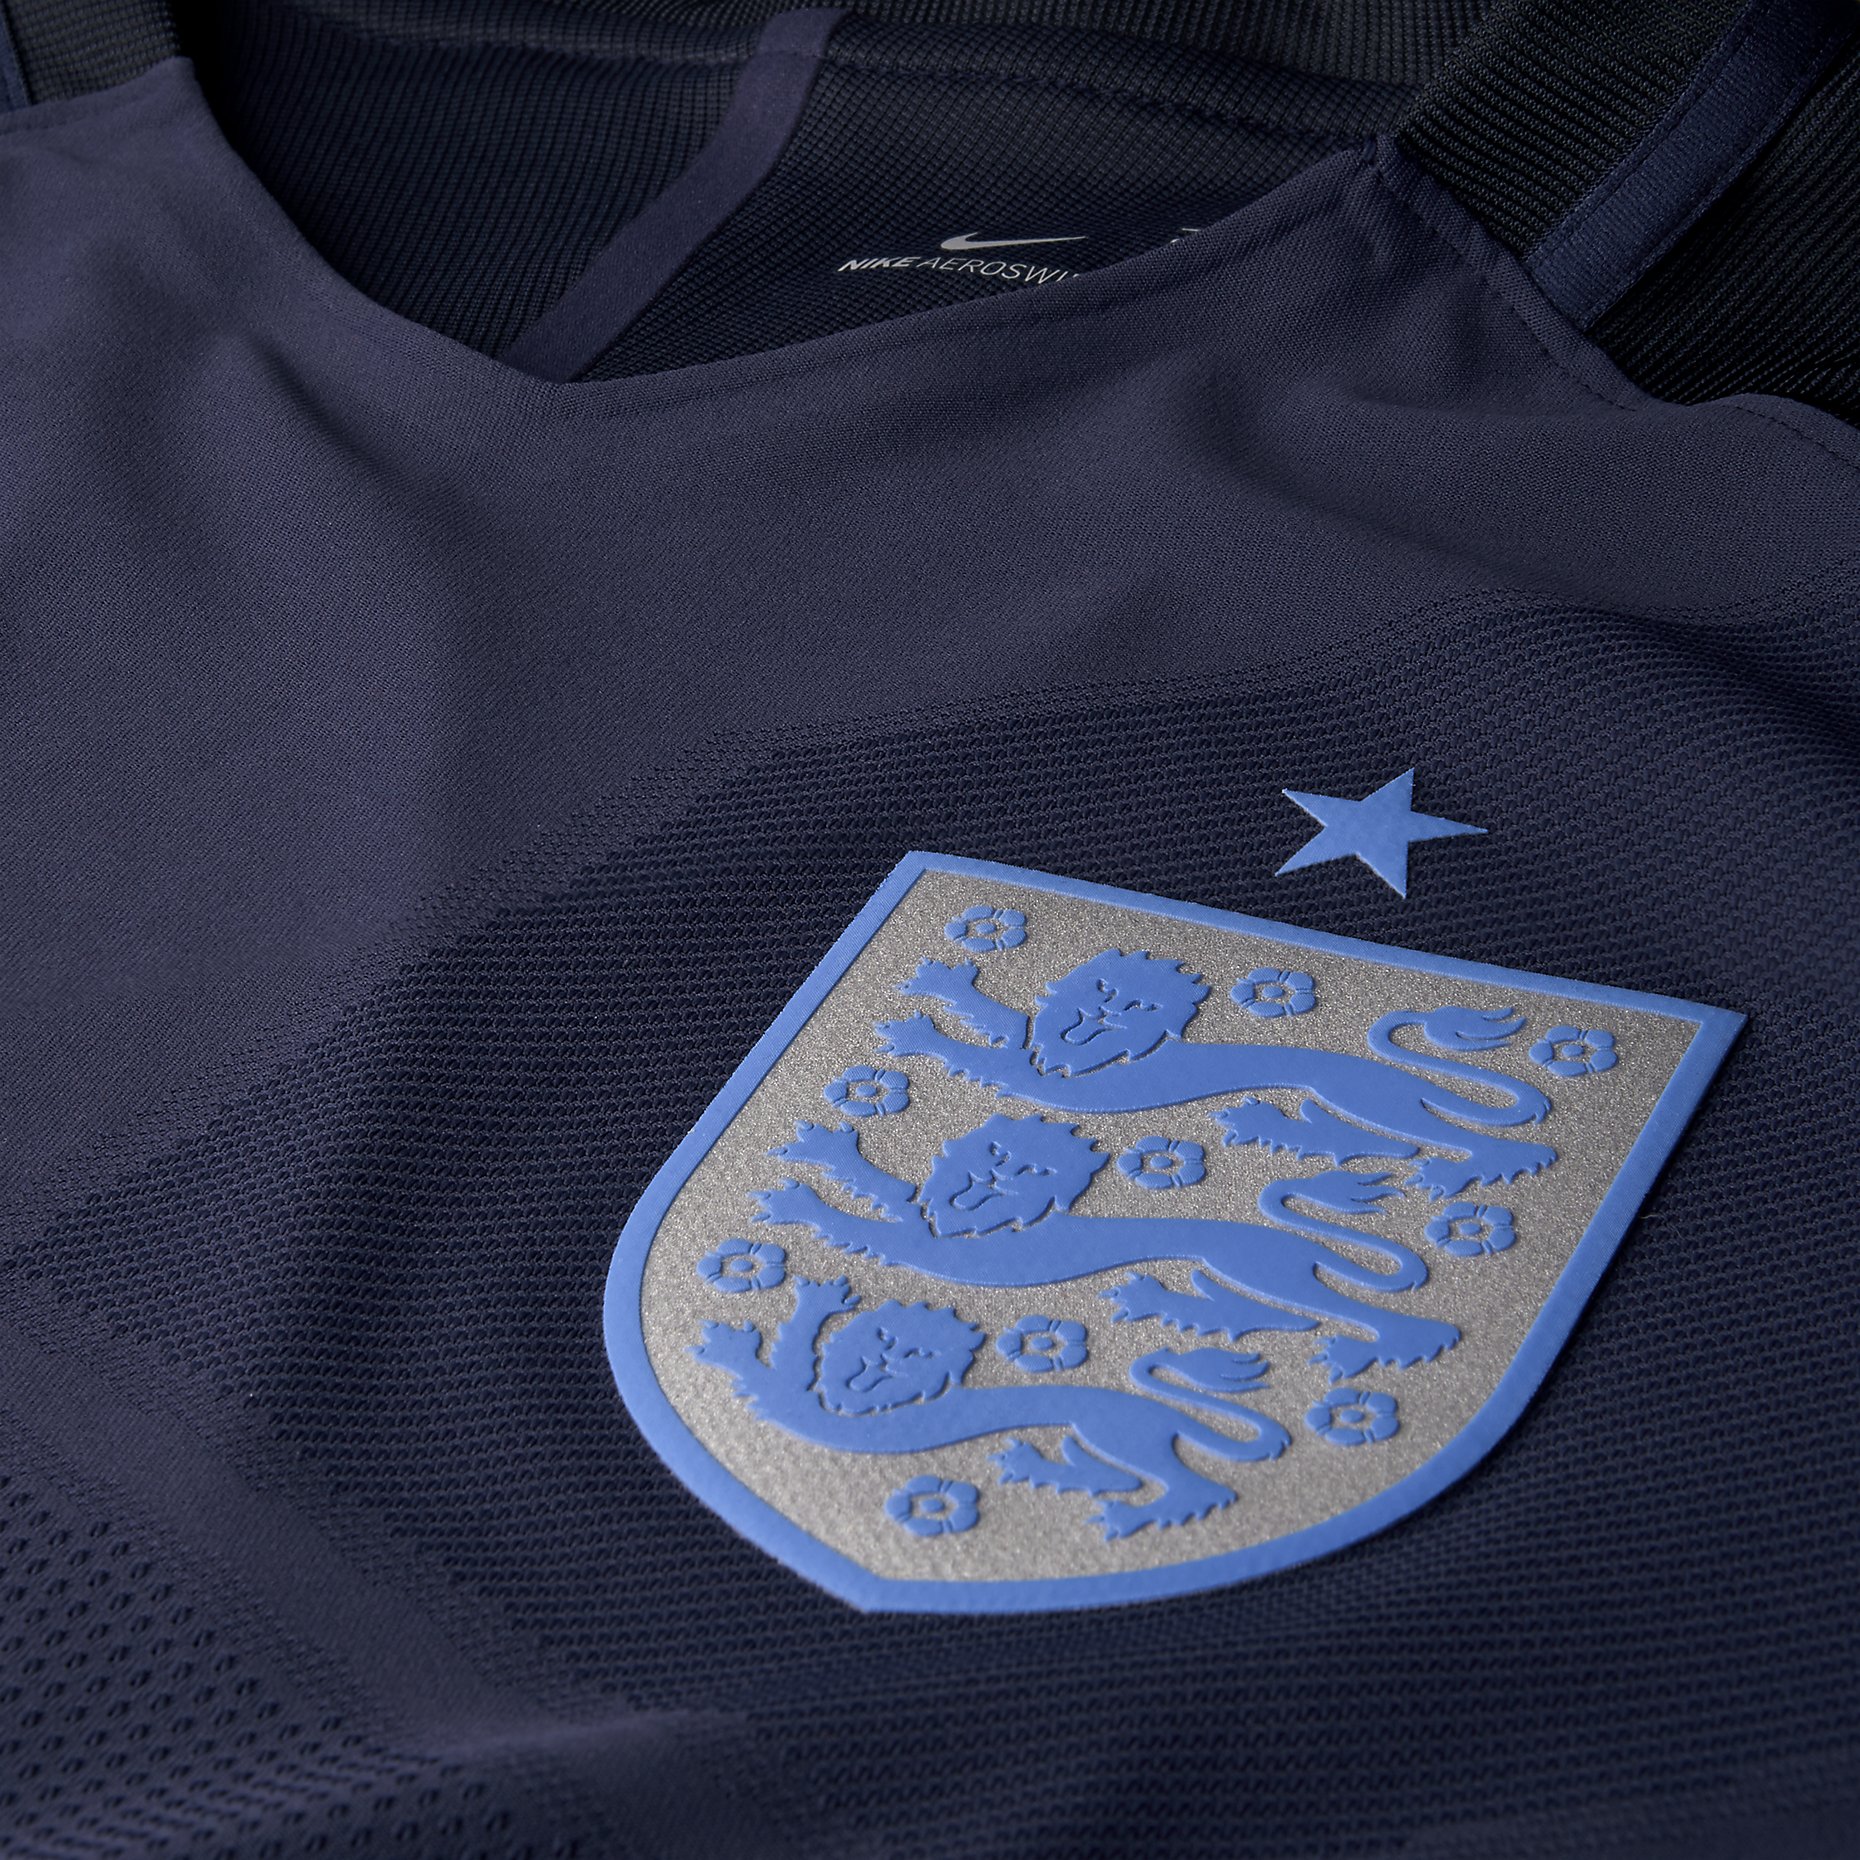 England 2017 Nike Away Kit - Football Shirt Culture - Latest Football ...